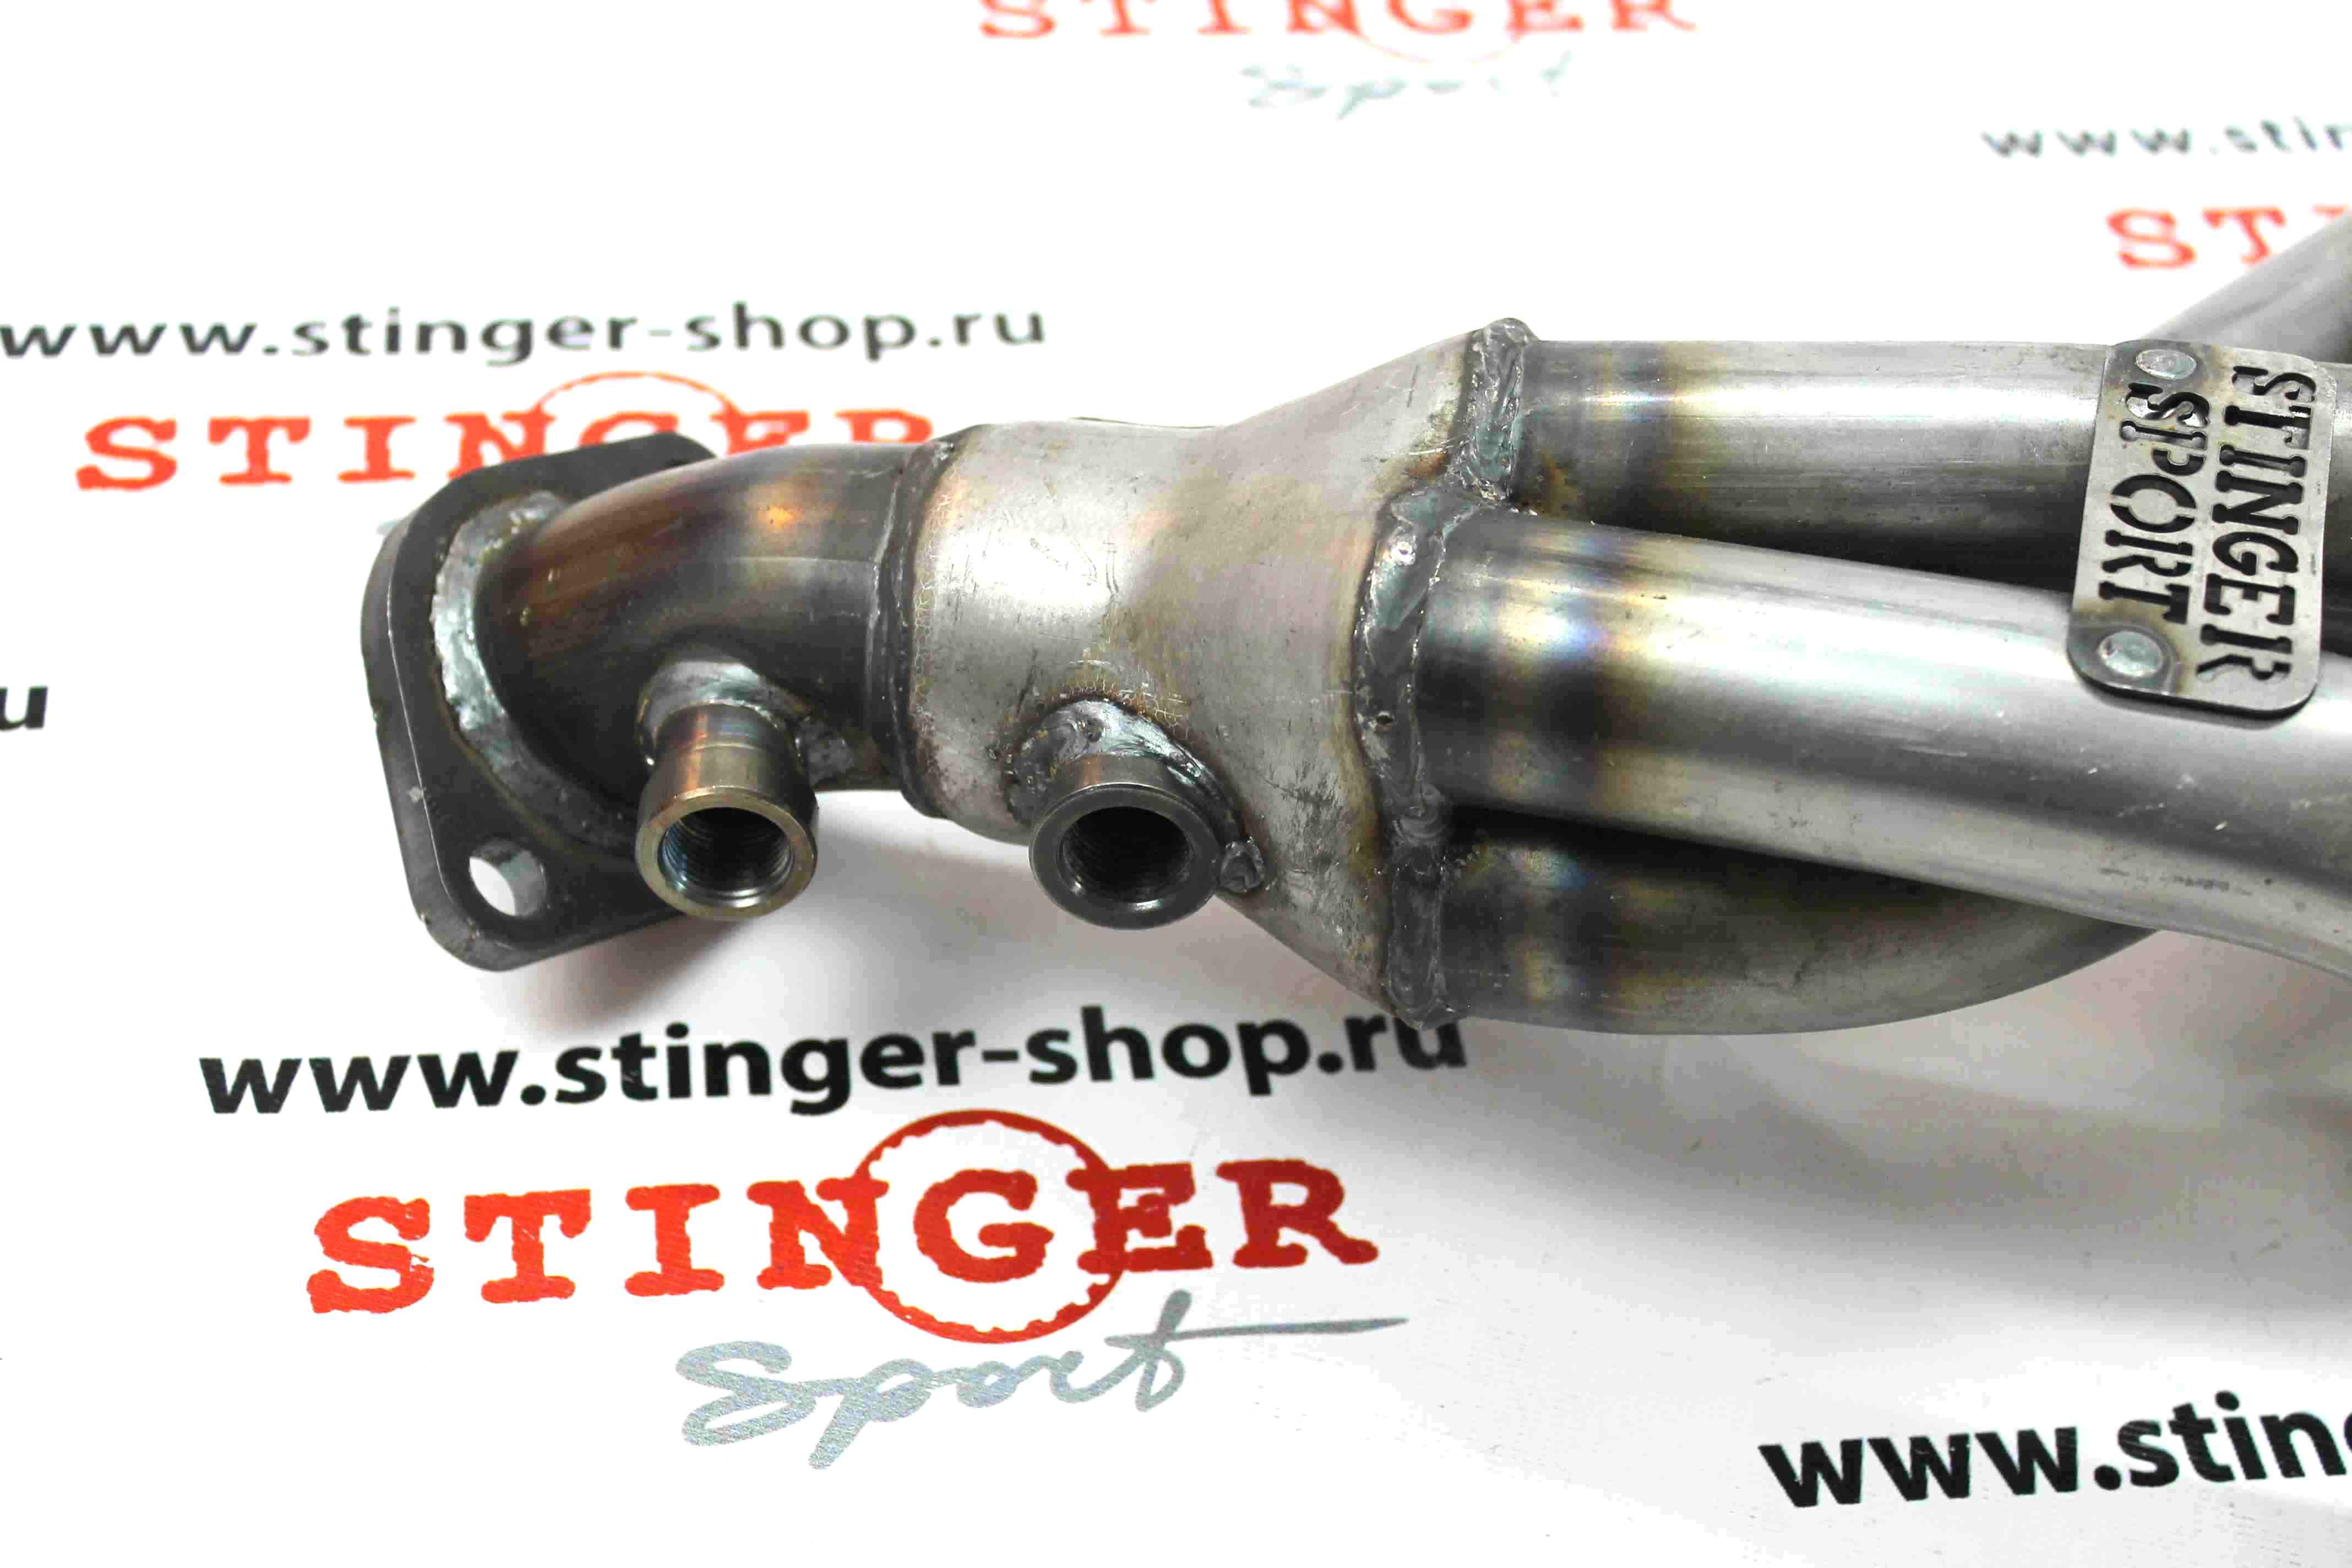 Вставка для замены катализатора Stinger Sport  для  Lifan X50 1.5L (103 л.с.) (2015-2020)